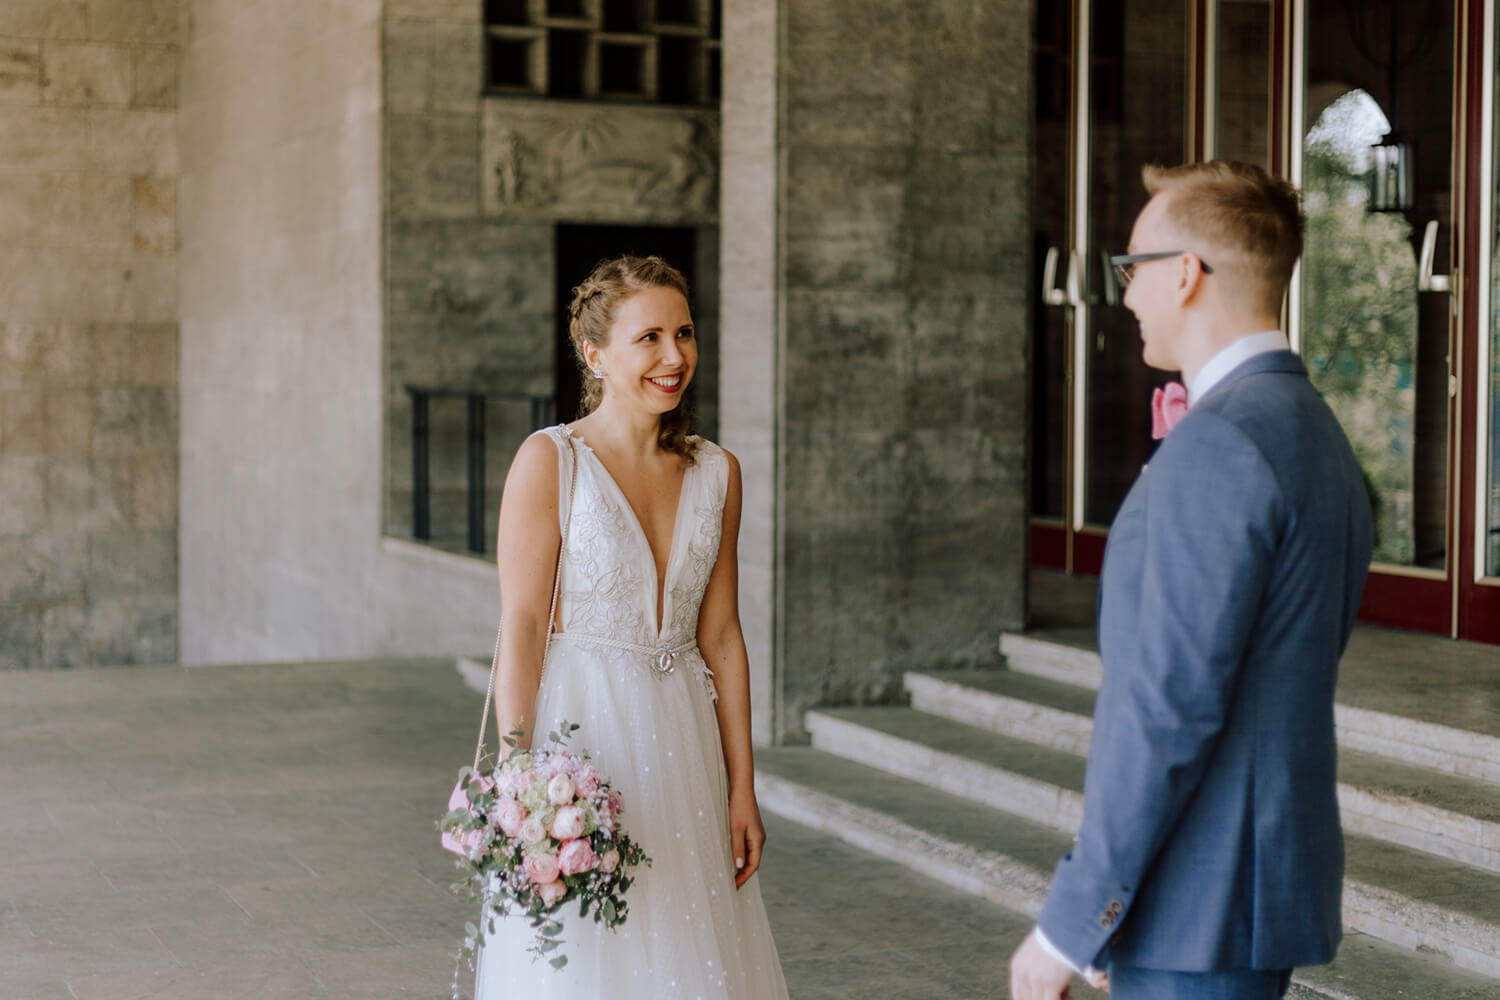 Wedding-Update-Our-First-Look-Weddingday-2018-Kationette-Bride-Fashionblogger-NRW